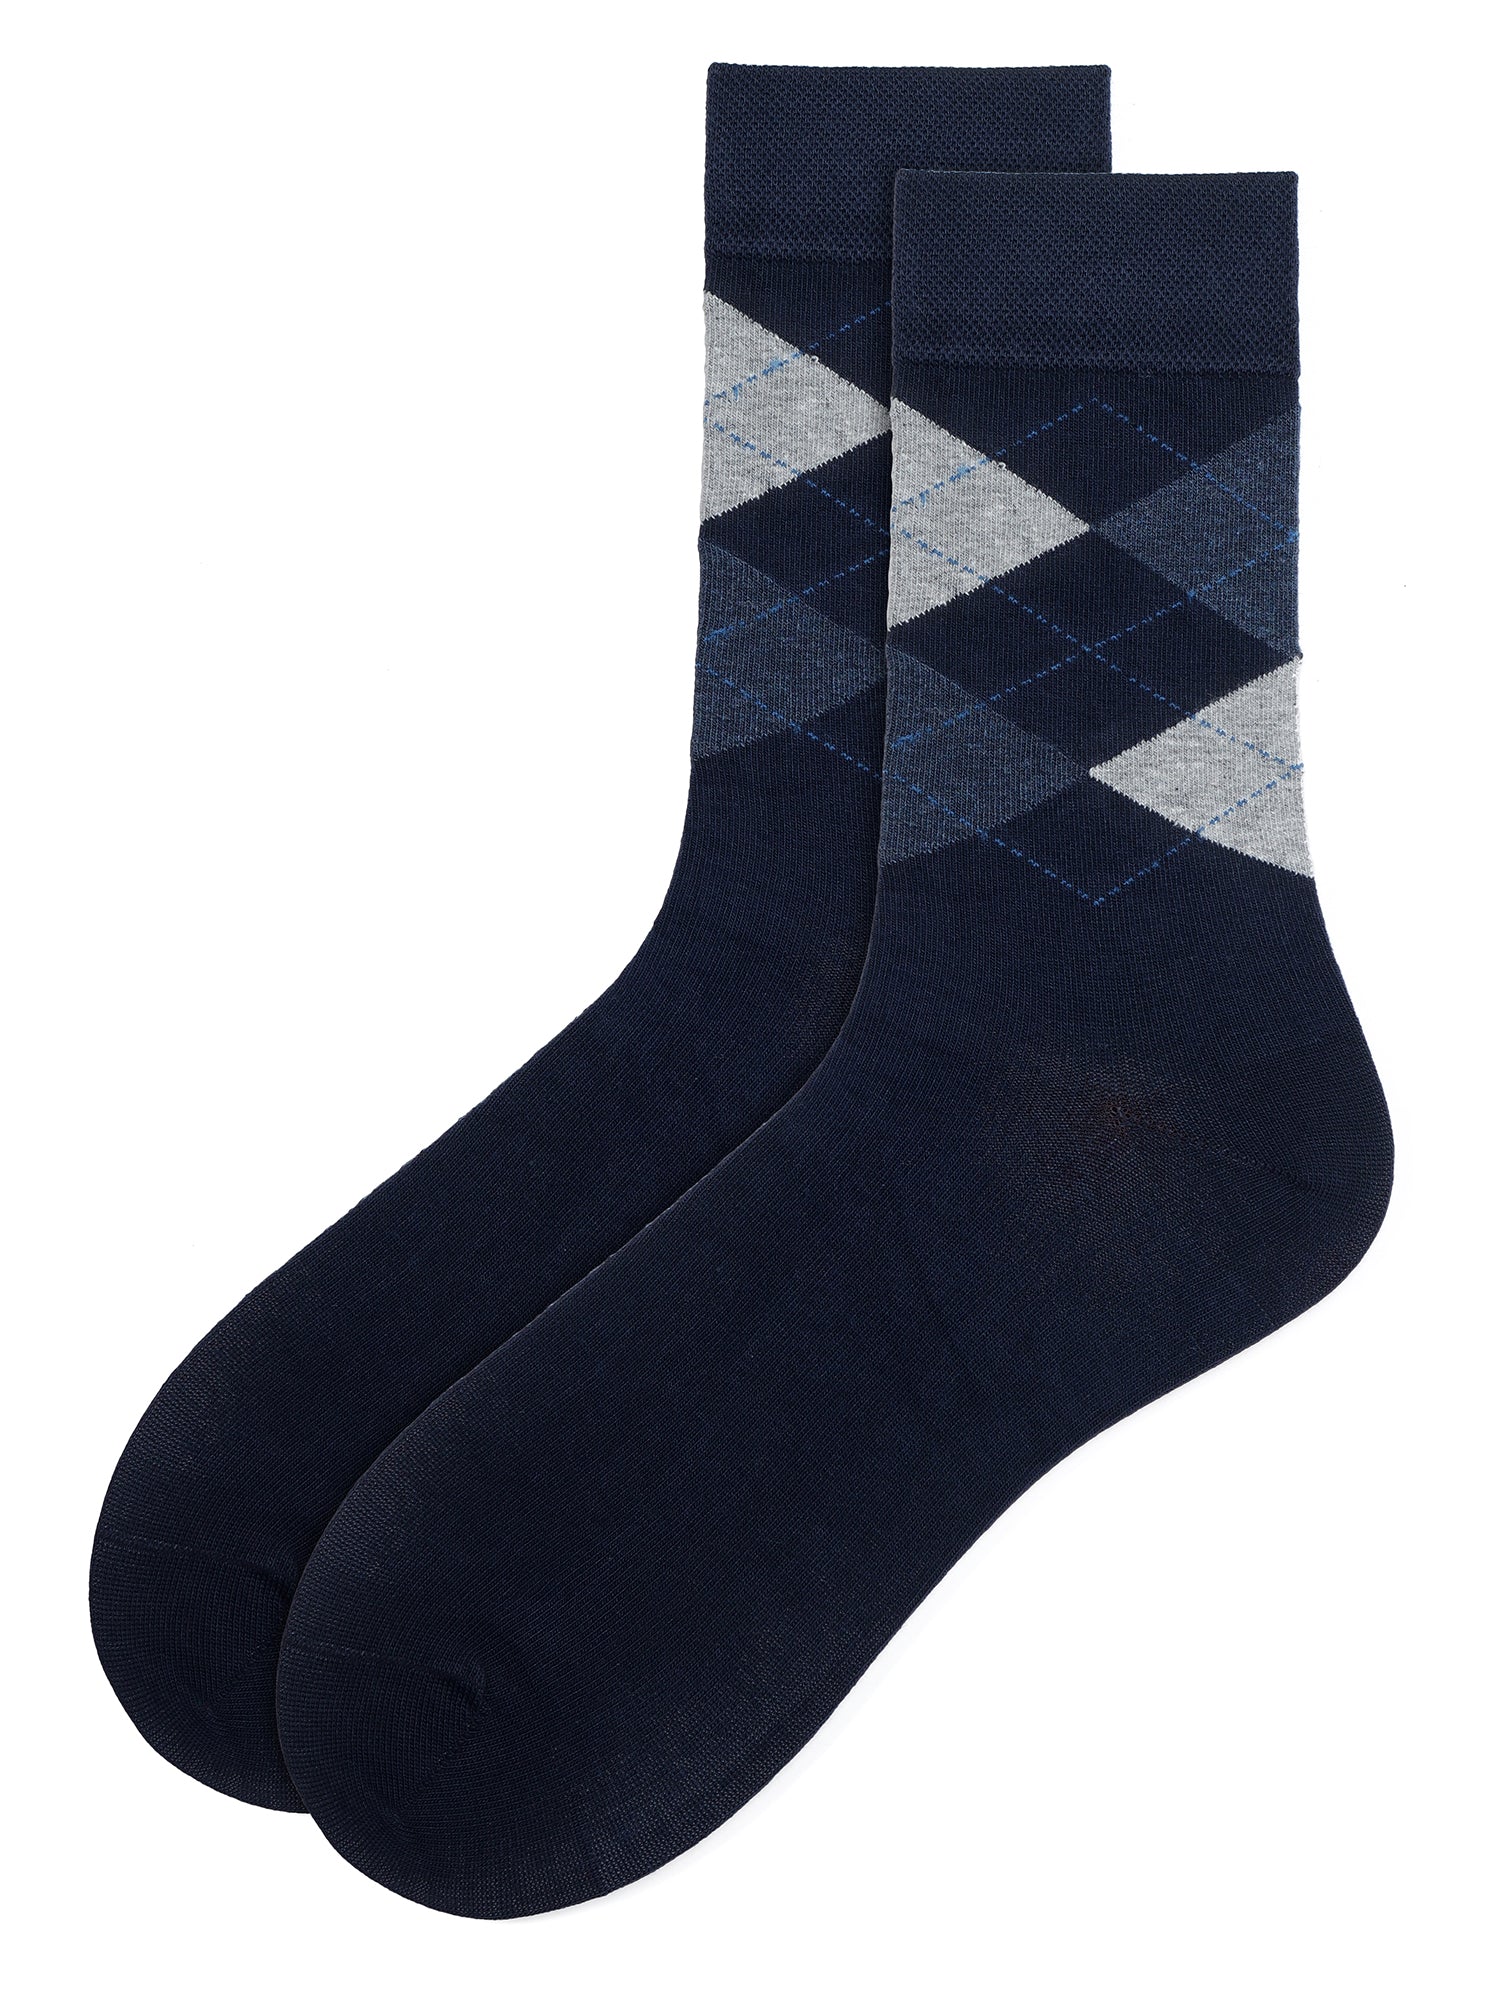 Classic Argyle Socks - Navy Blue